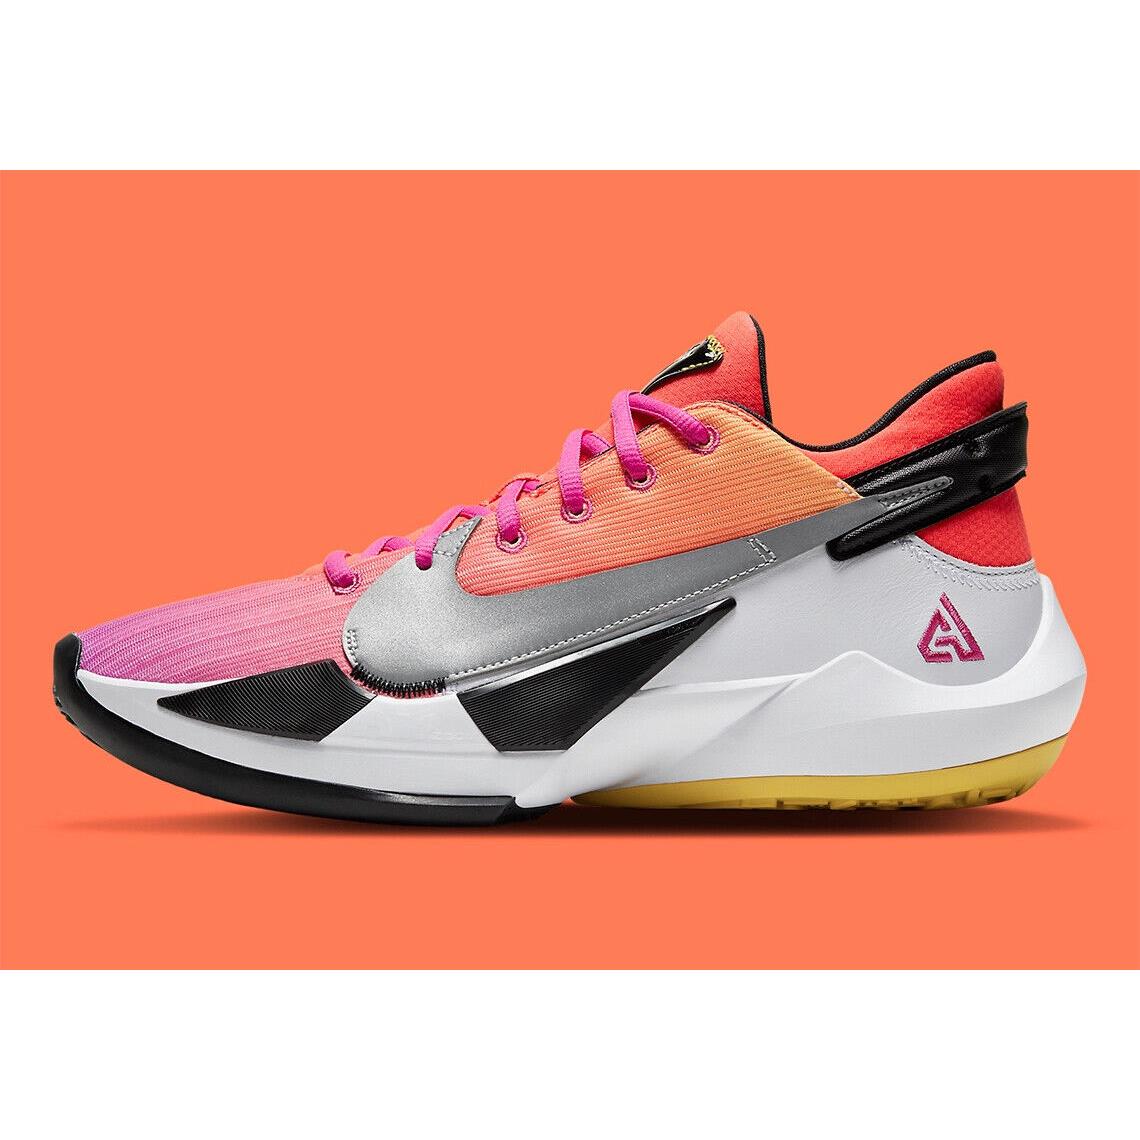 Nike shoes FREAK - Bright Crimson/Fire Pink/White/Black 1